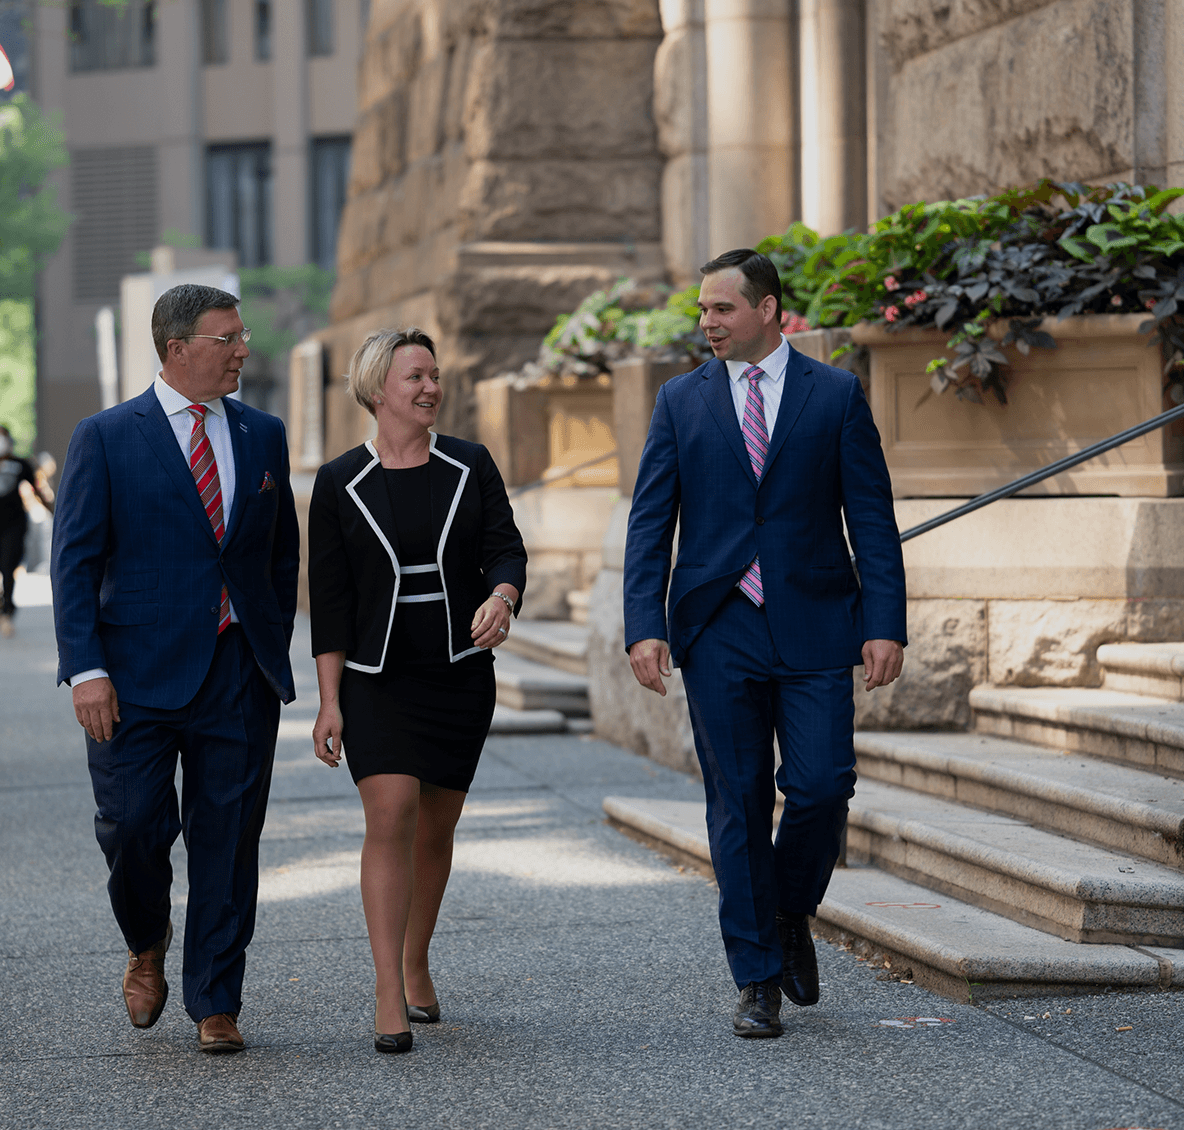 Three attorneys walking